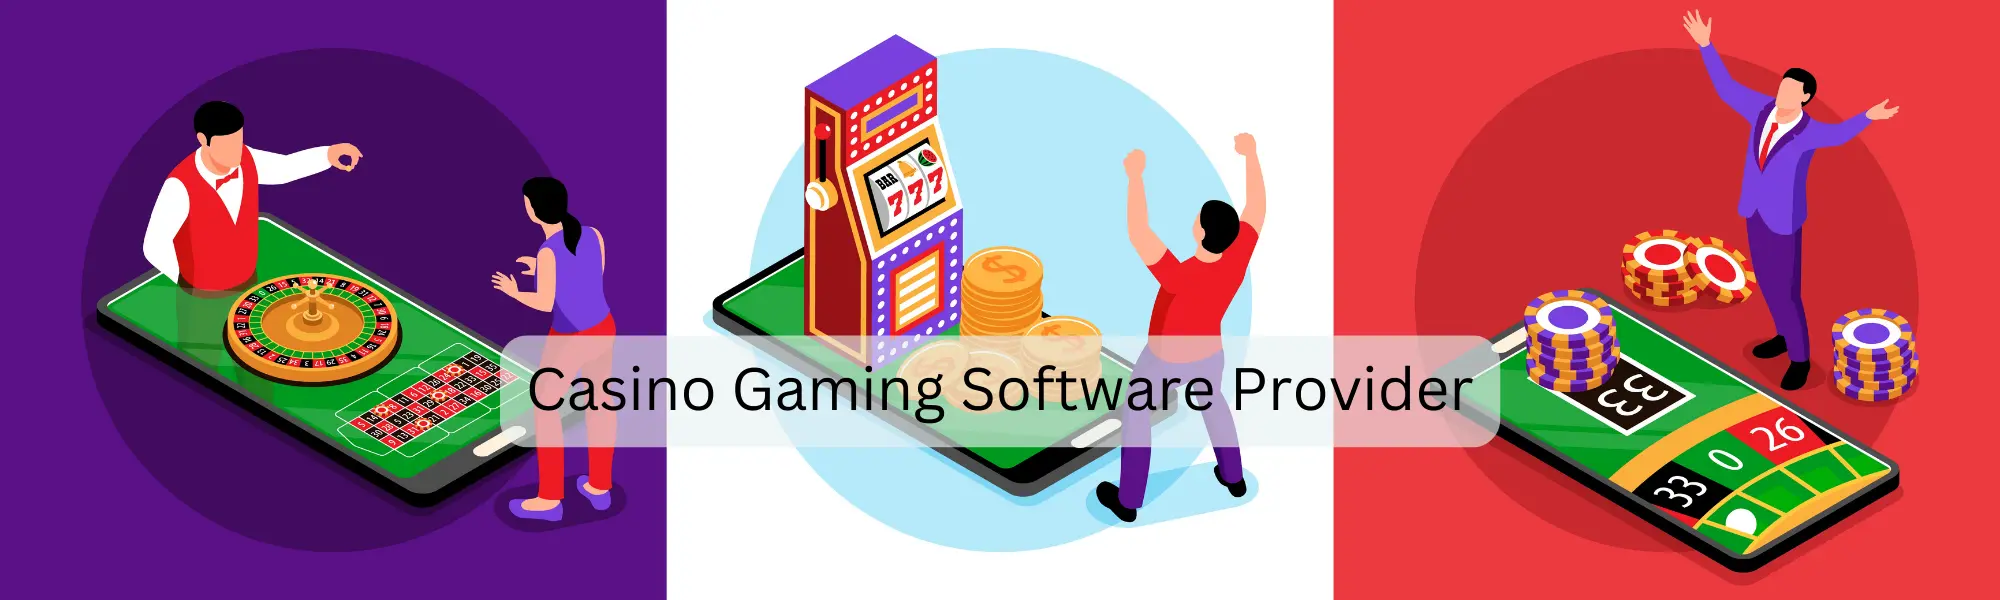 casino gaming software provider